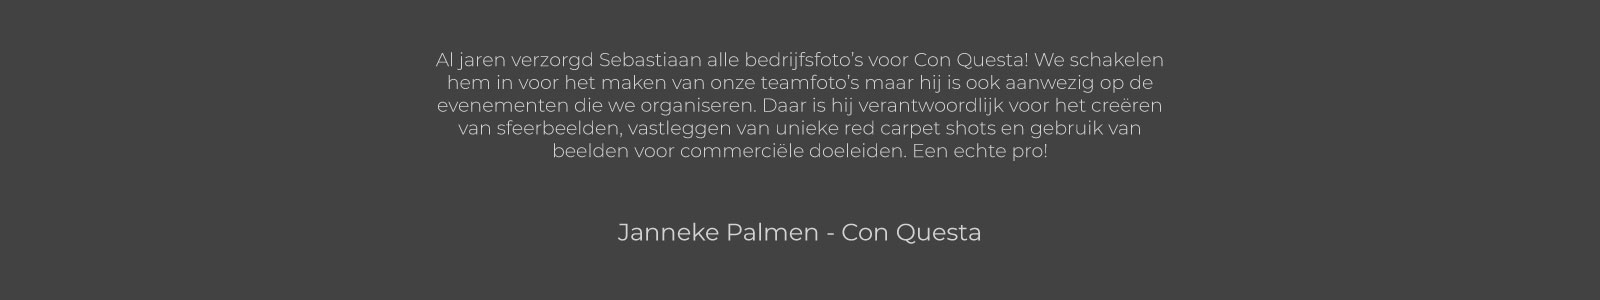 Janneke Palmen - Con Questa